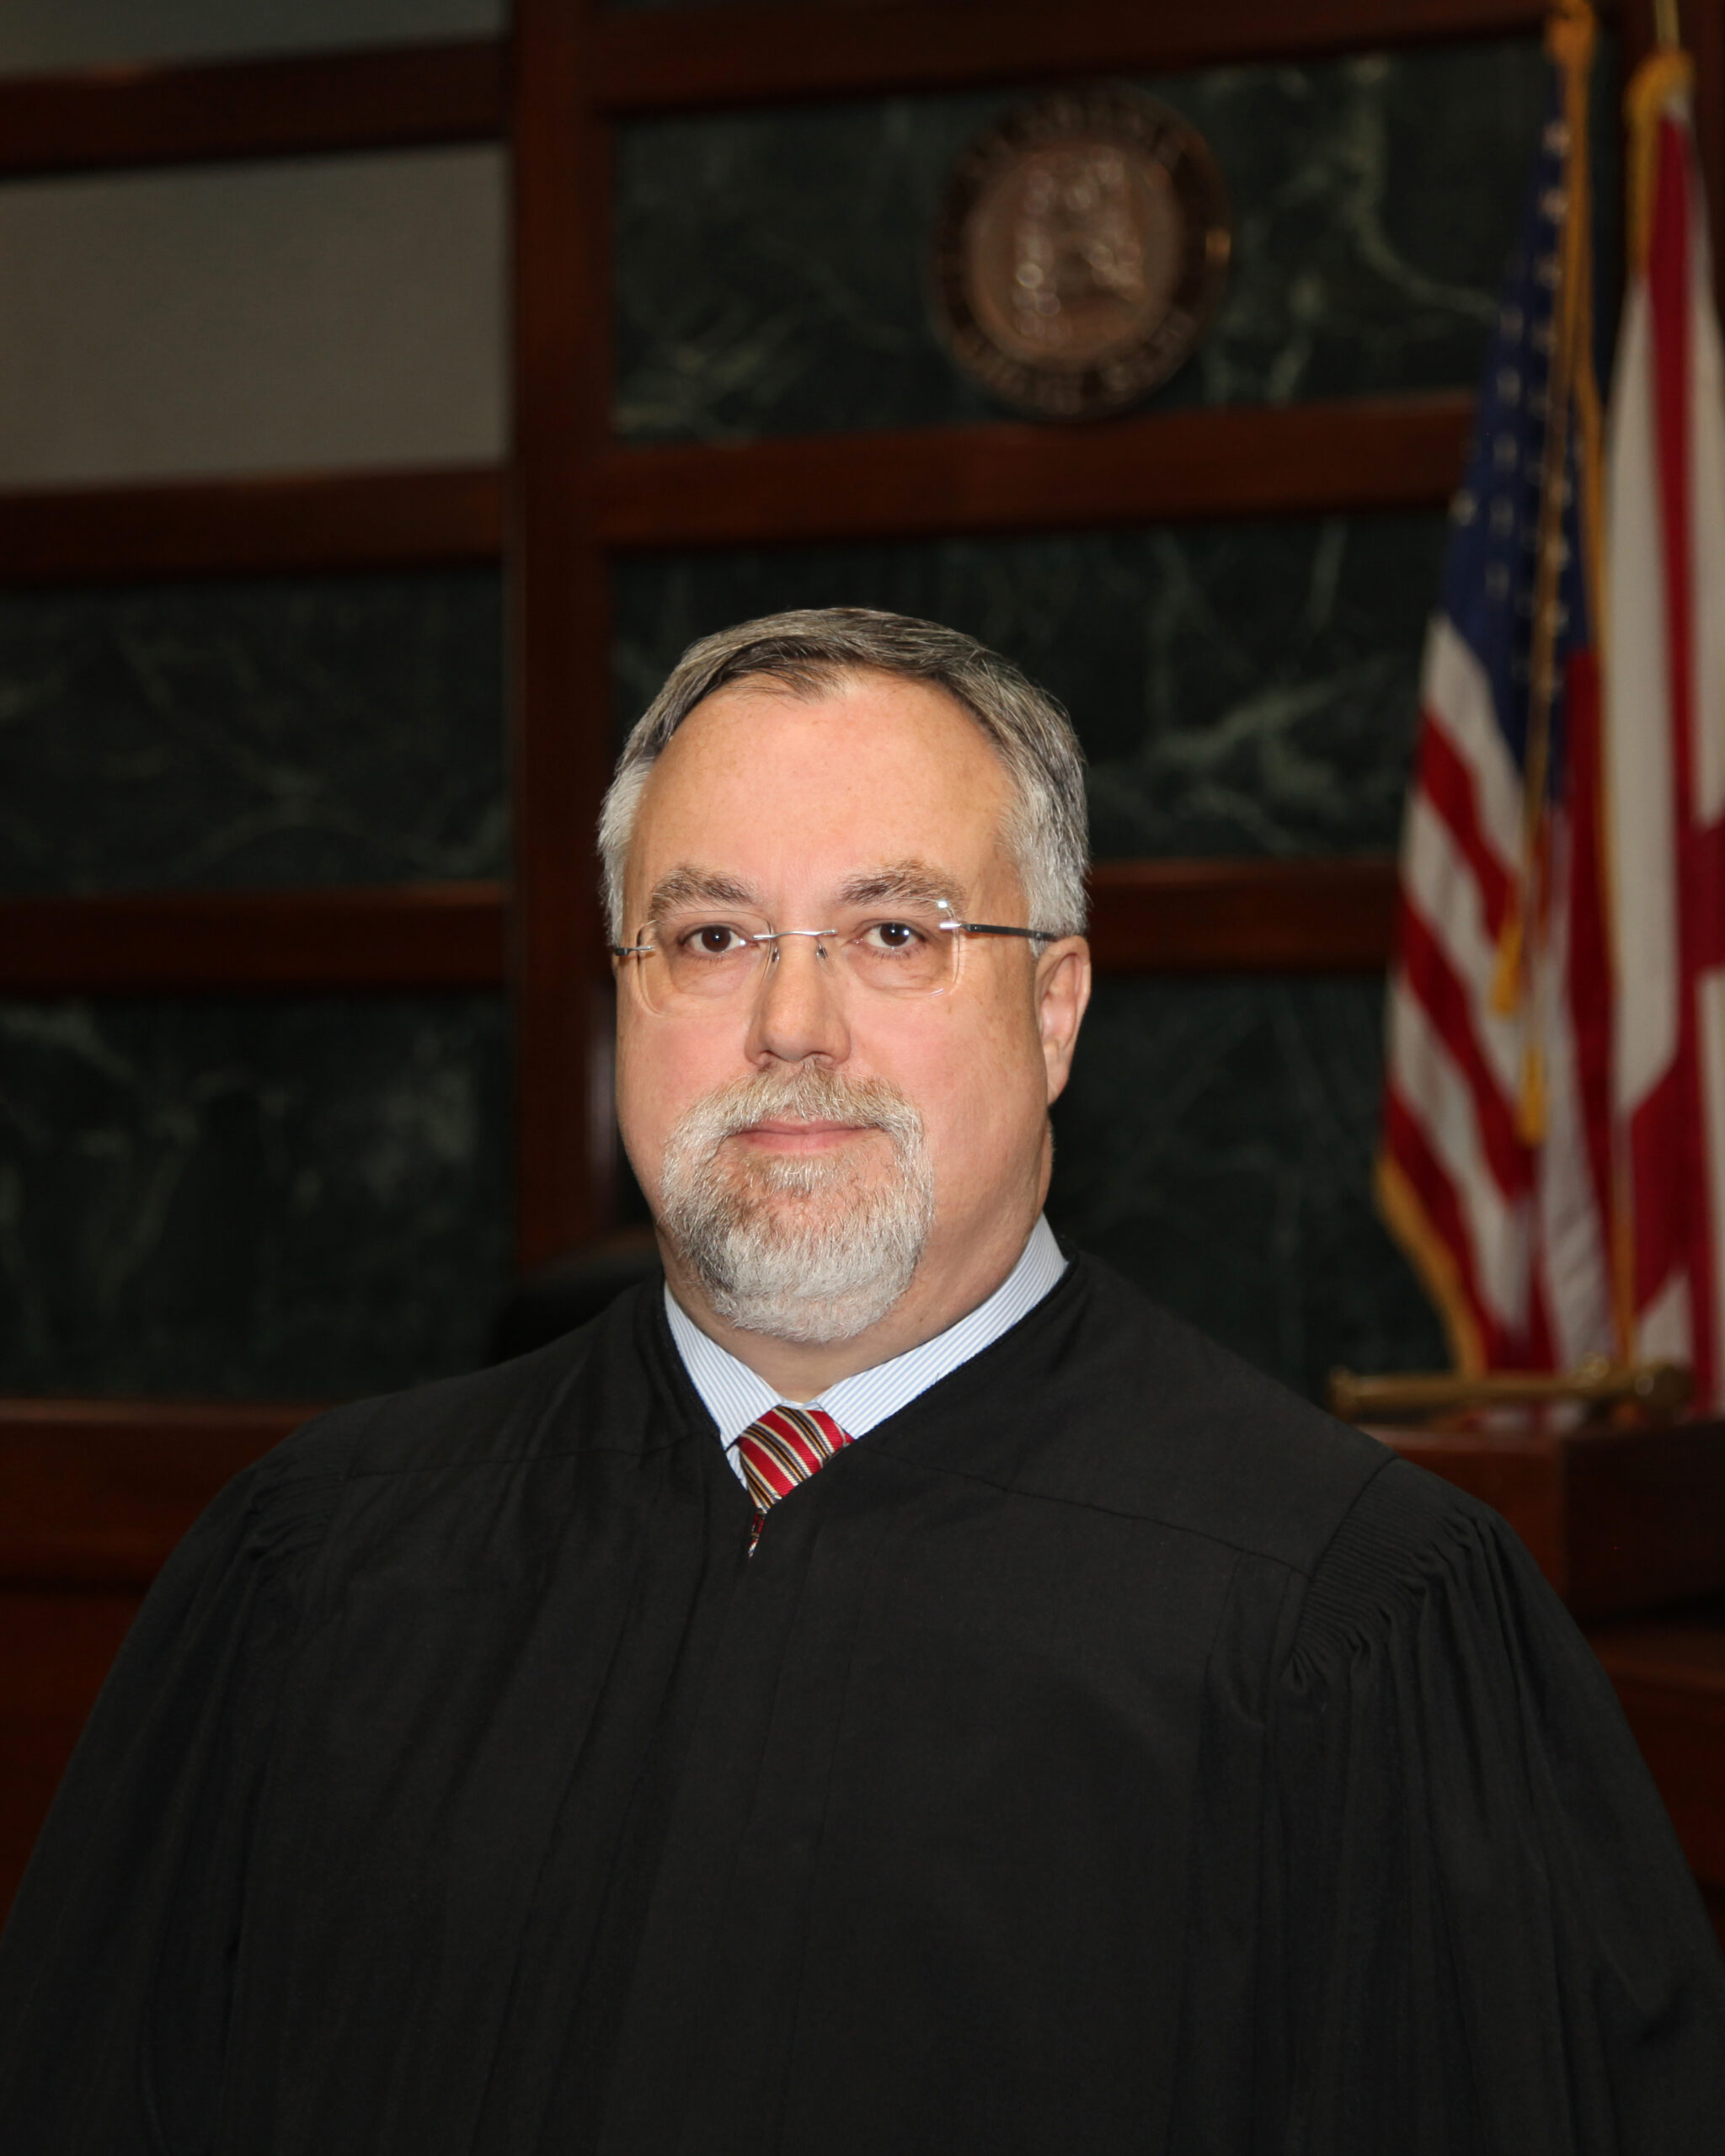 Judge Graham Receives Award